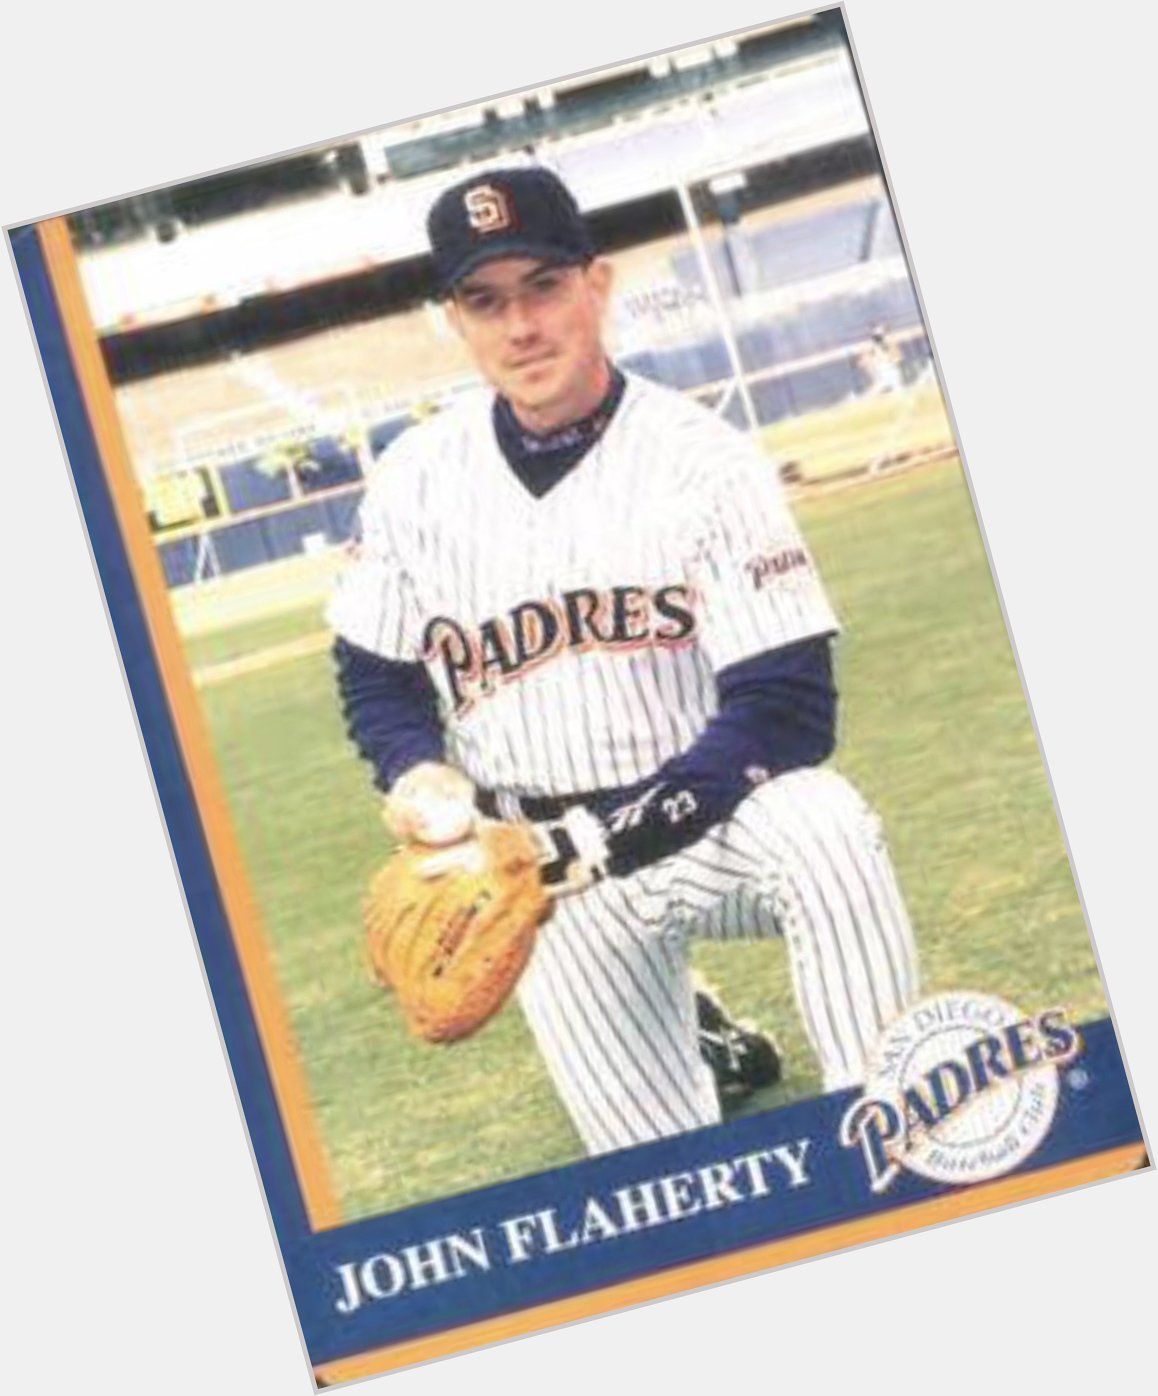 A Happy Birthday to former Catcher John Flaherty 